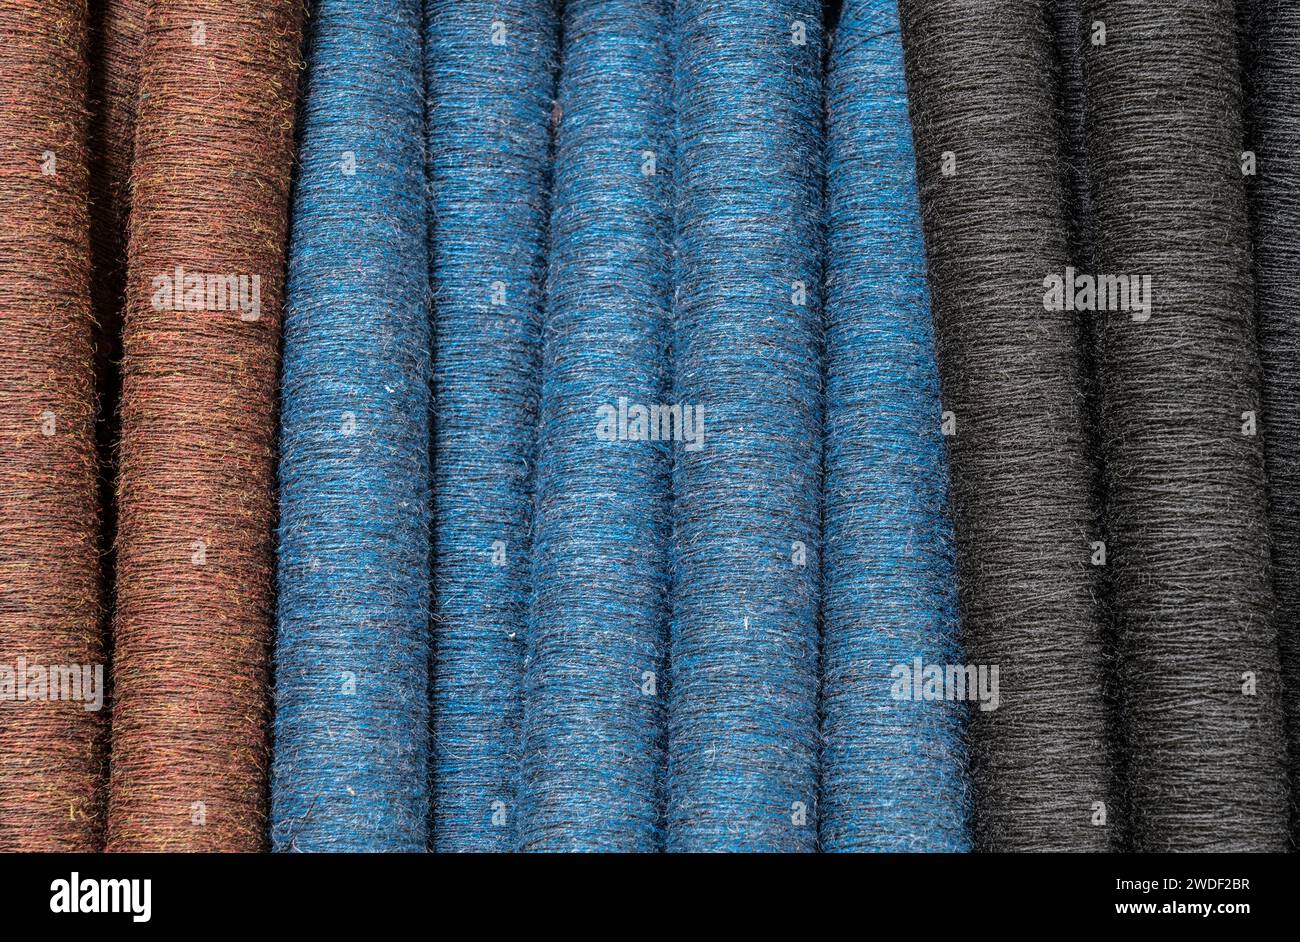 spools of colorful fabrics Stock Photo